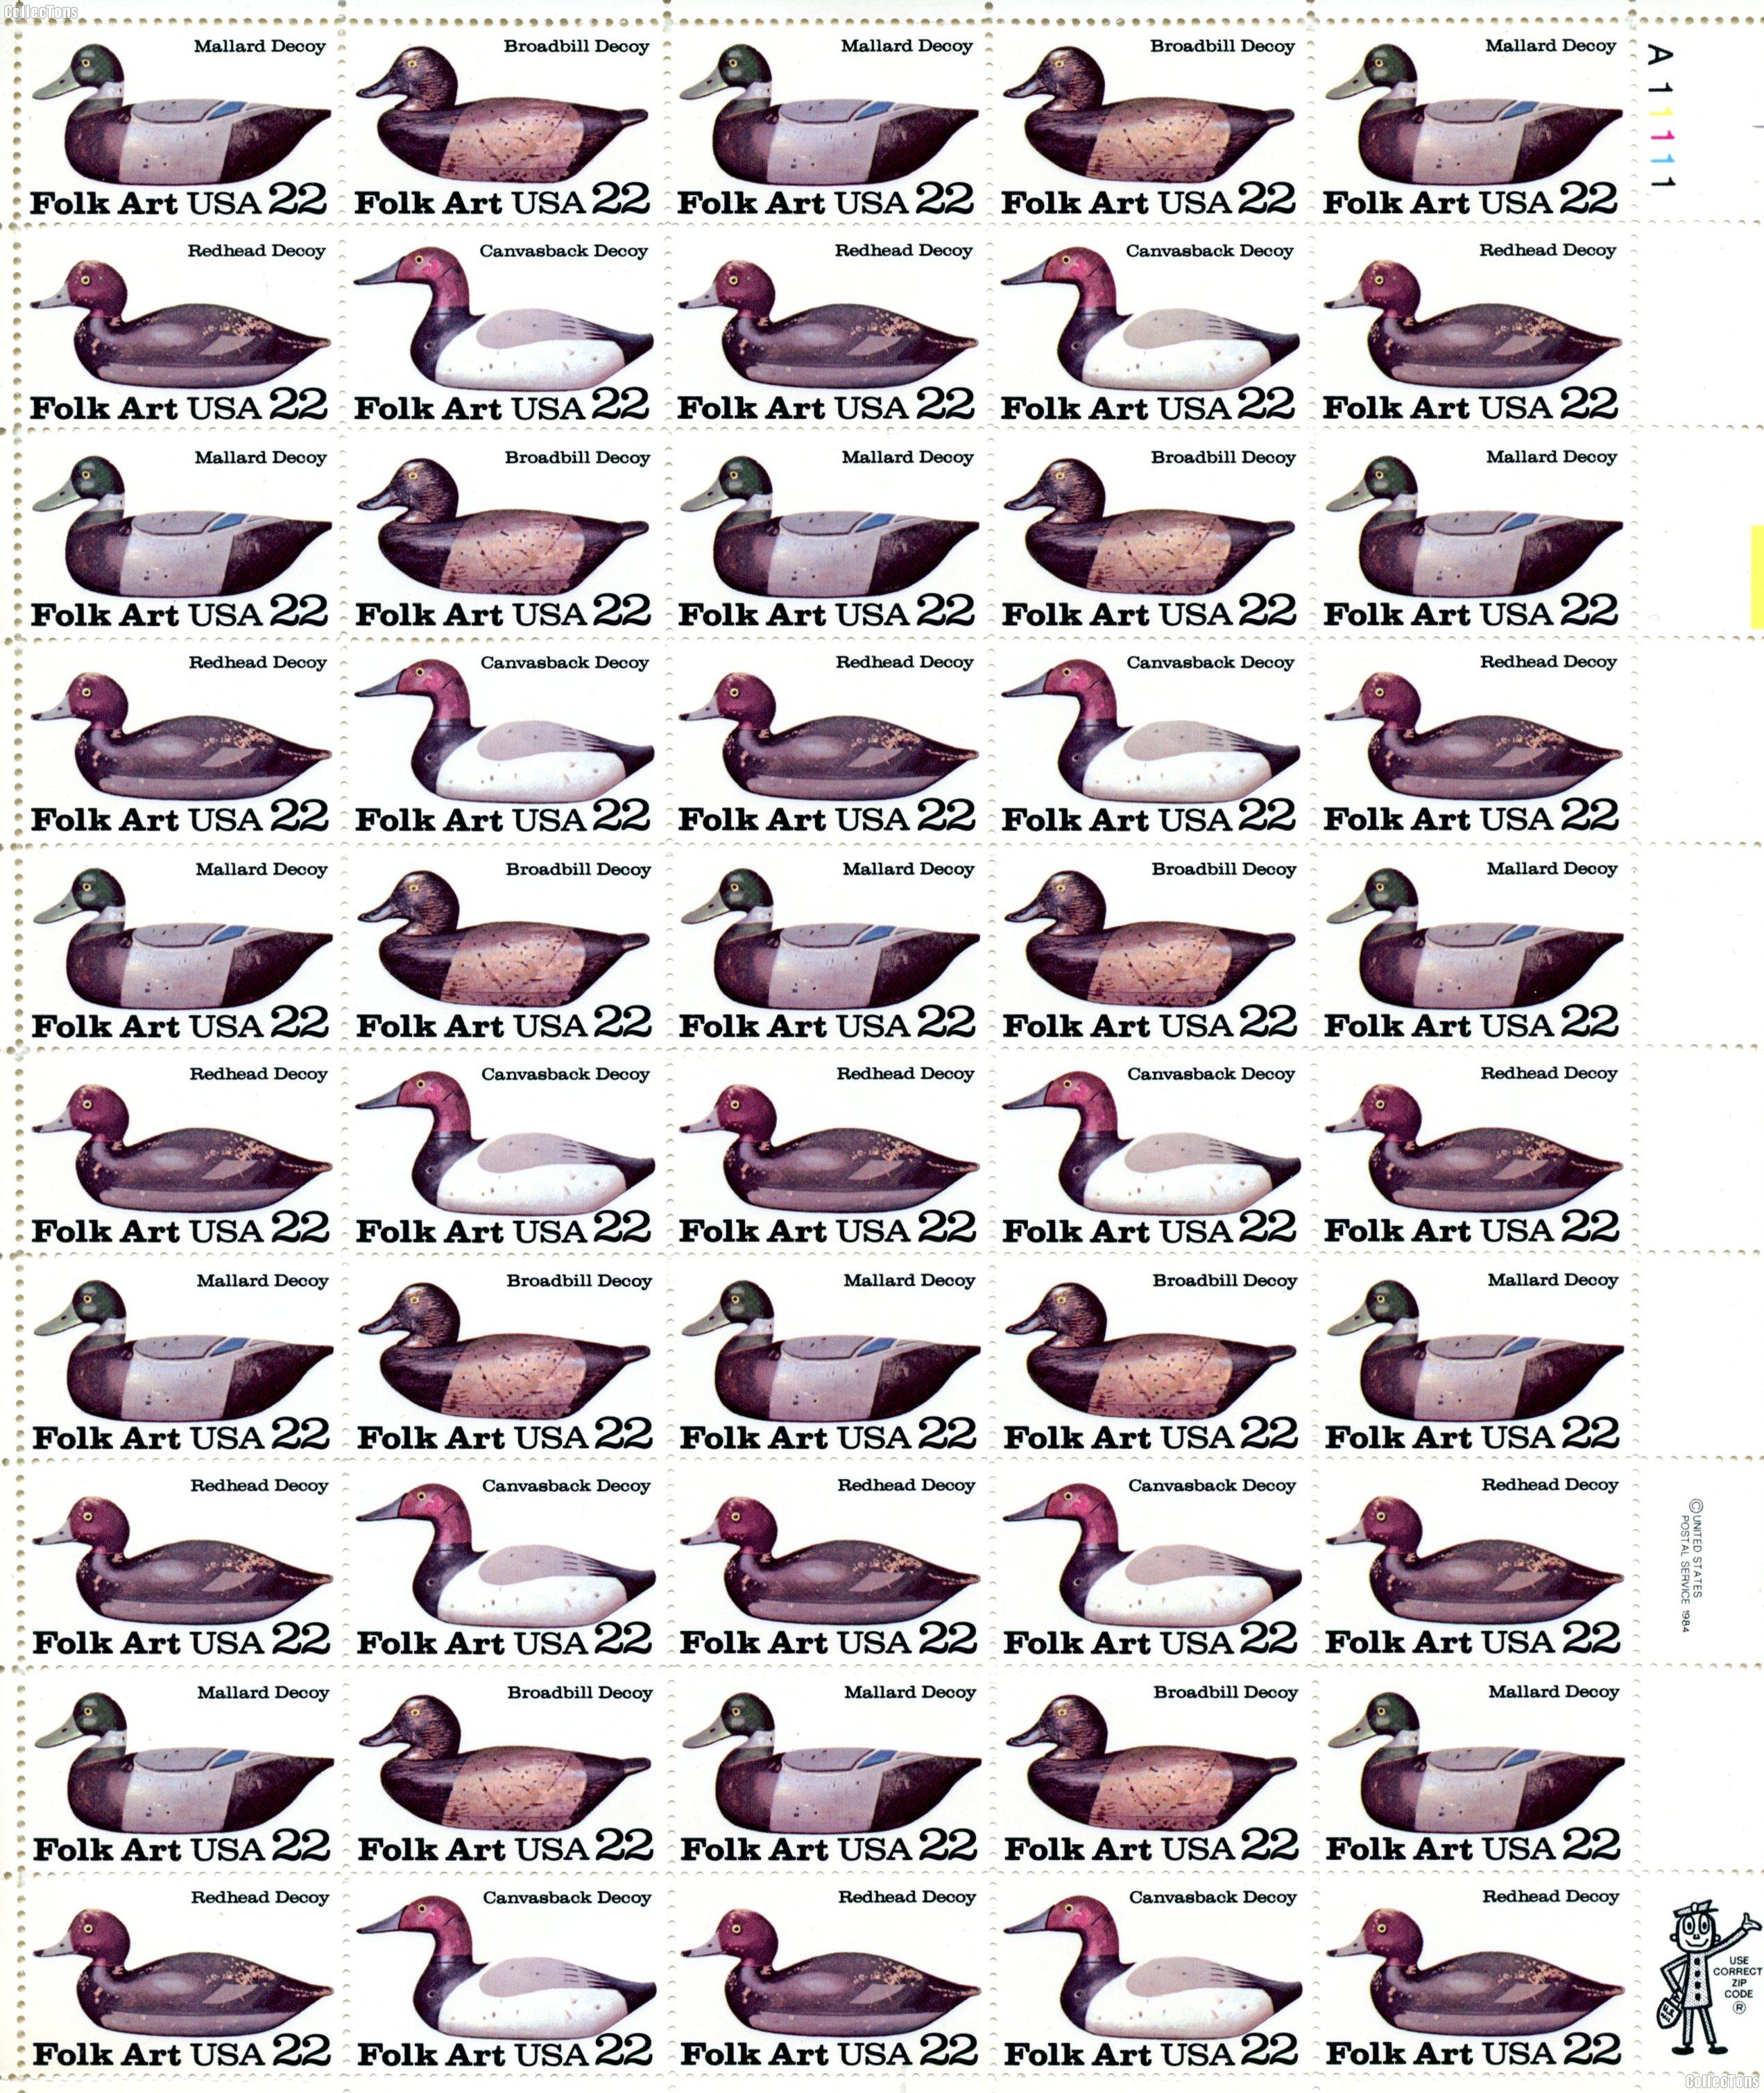 1985 Duck Decoys 22 Cent US Postage Stamp MNH Sheet of 50 Scott #2138-2141